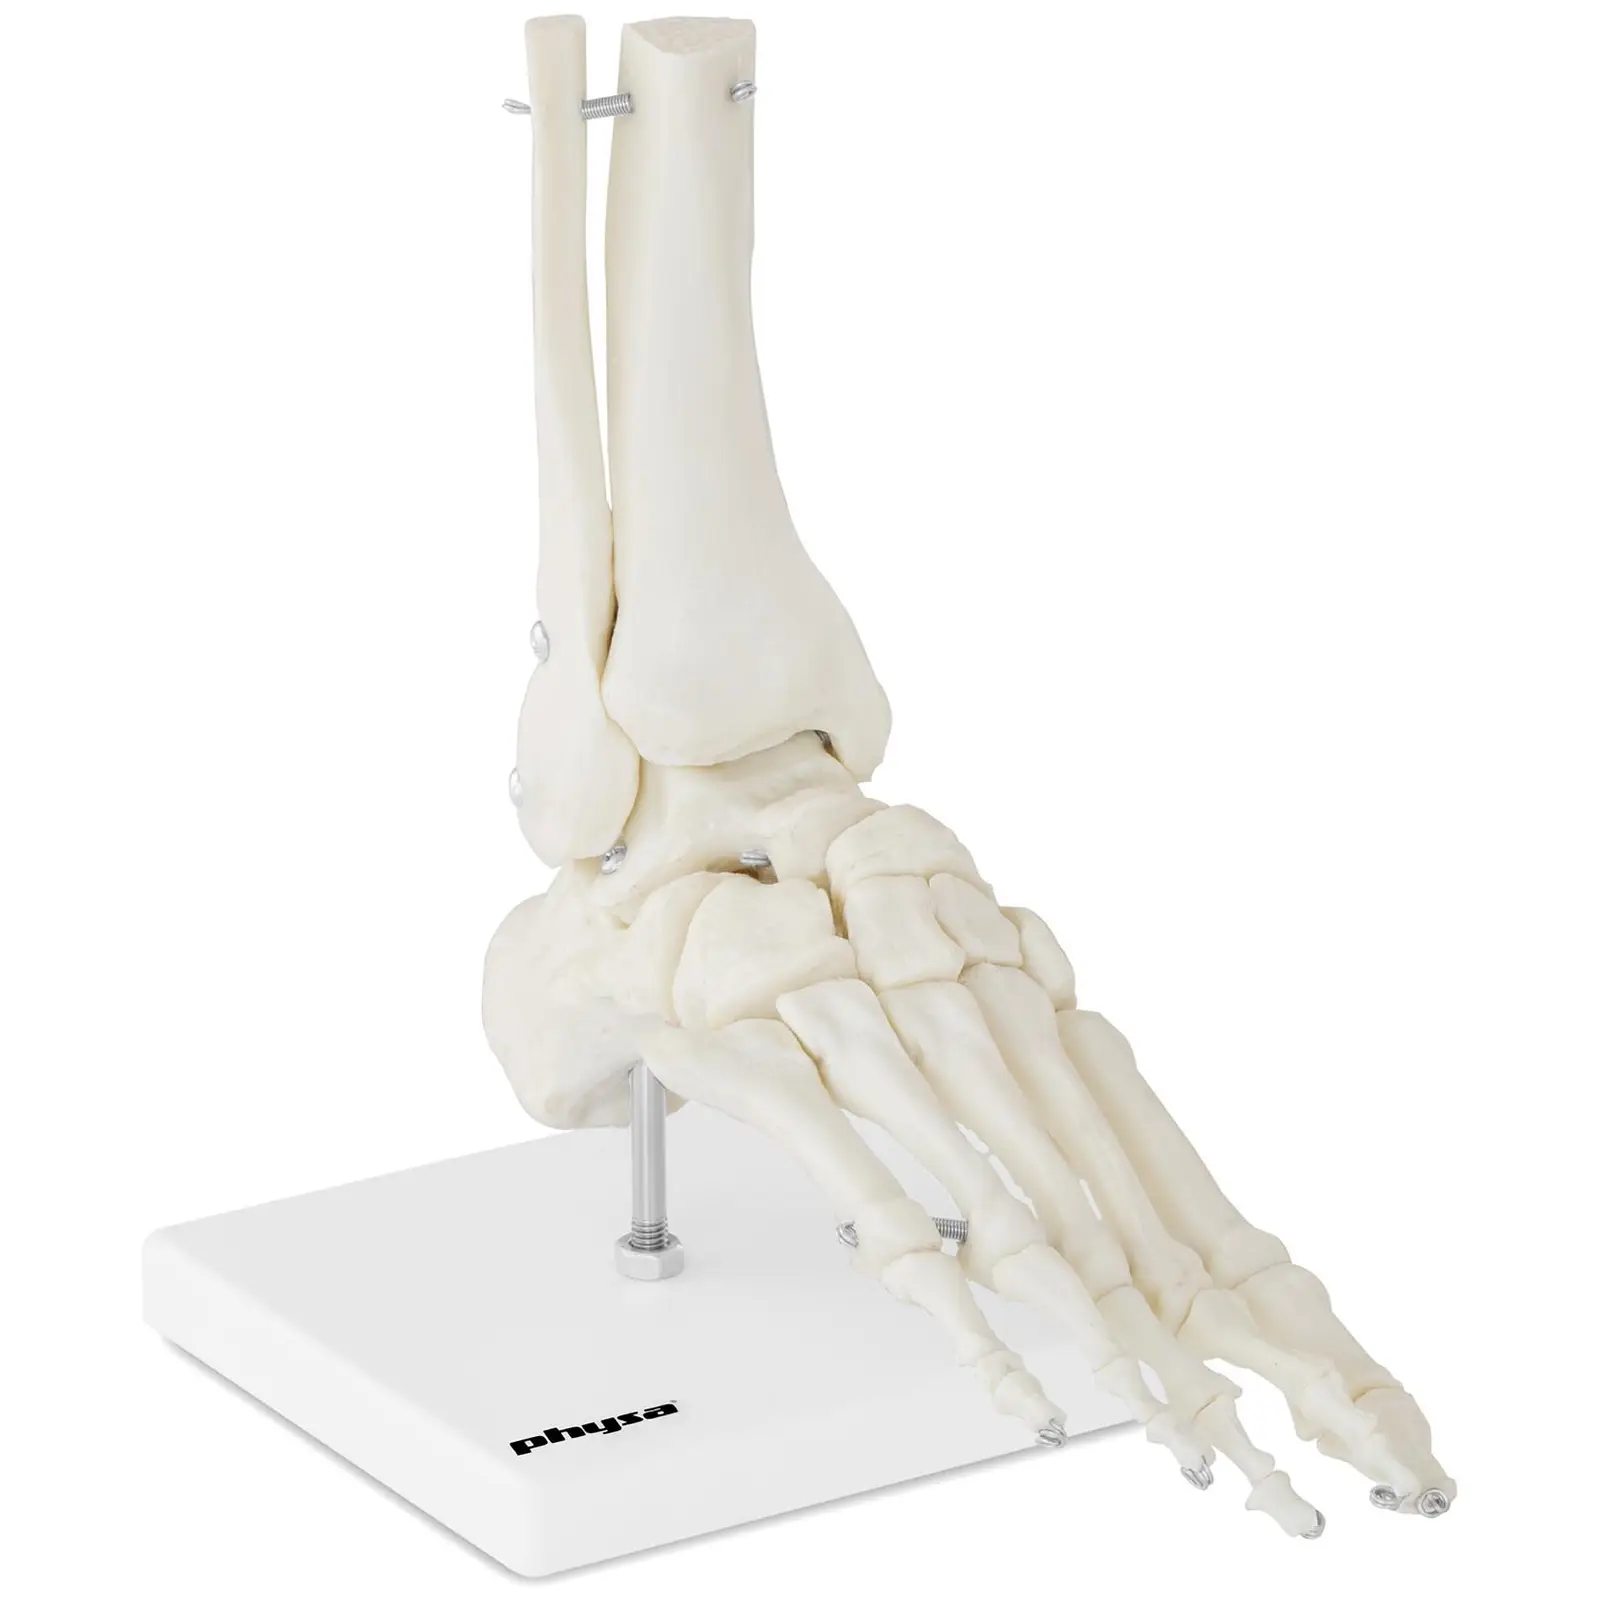 Maquette anatomique pied humain - 1